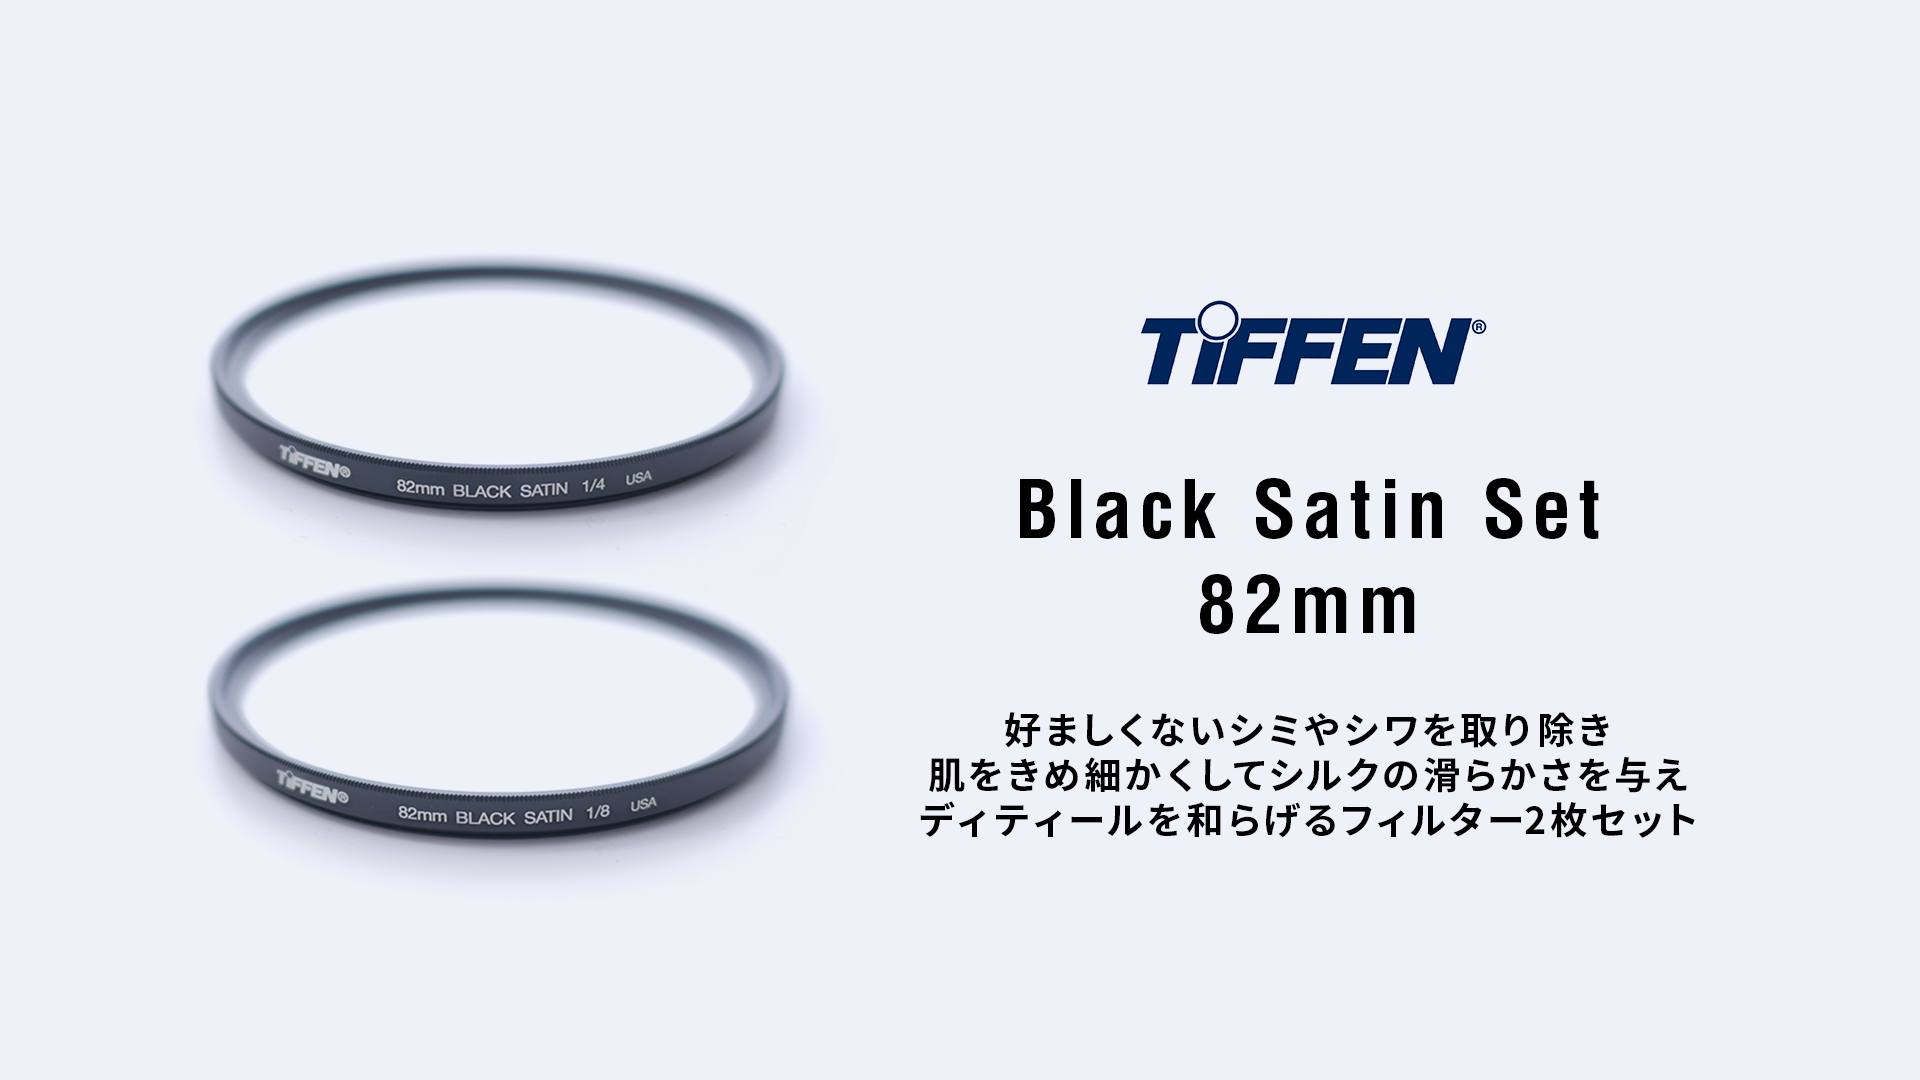 TiFFEN Black Satin 1/4+1/8 Set 82mm | 撮影機材レンタル CREARC